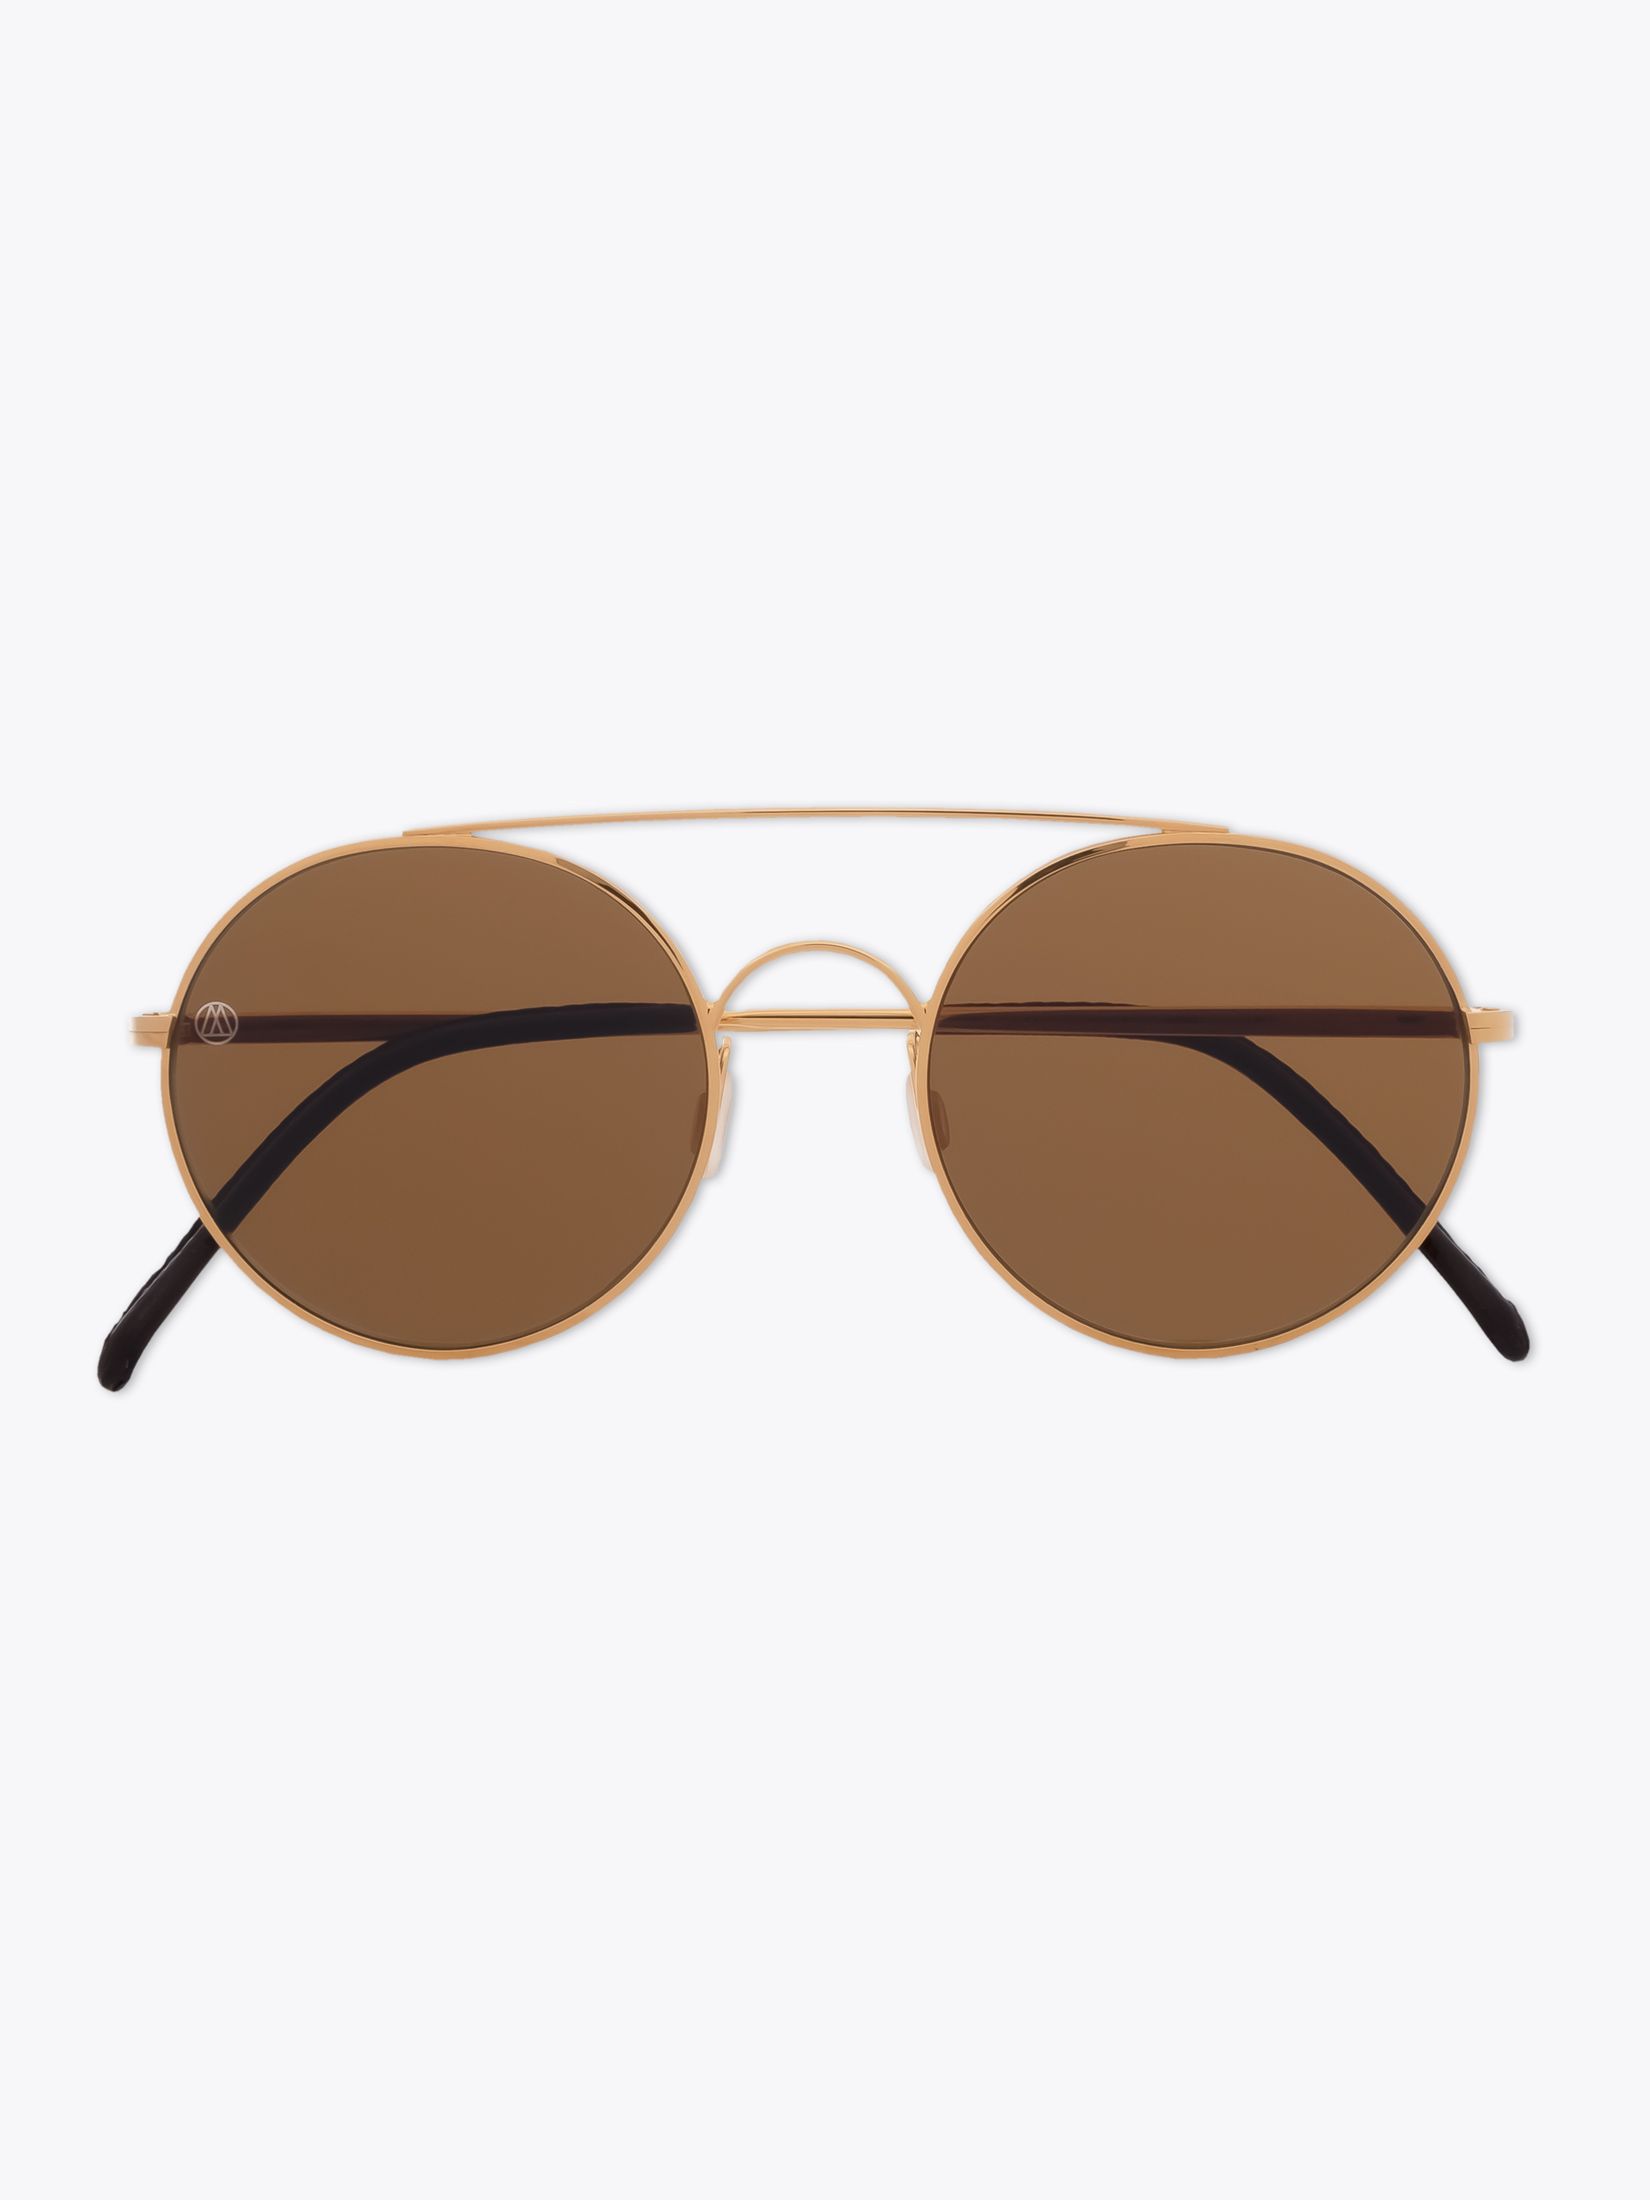 Sunglasses Tide Black Grey | Karün North America